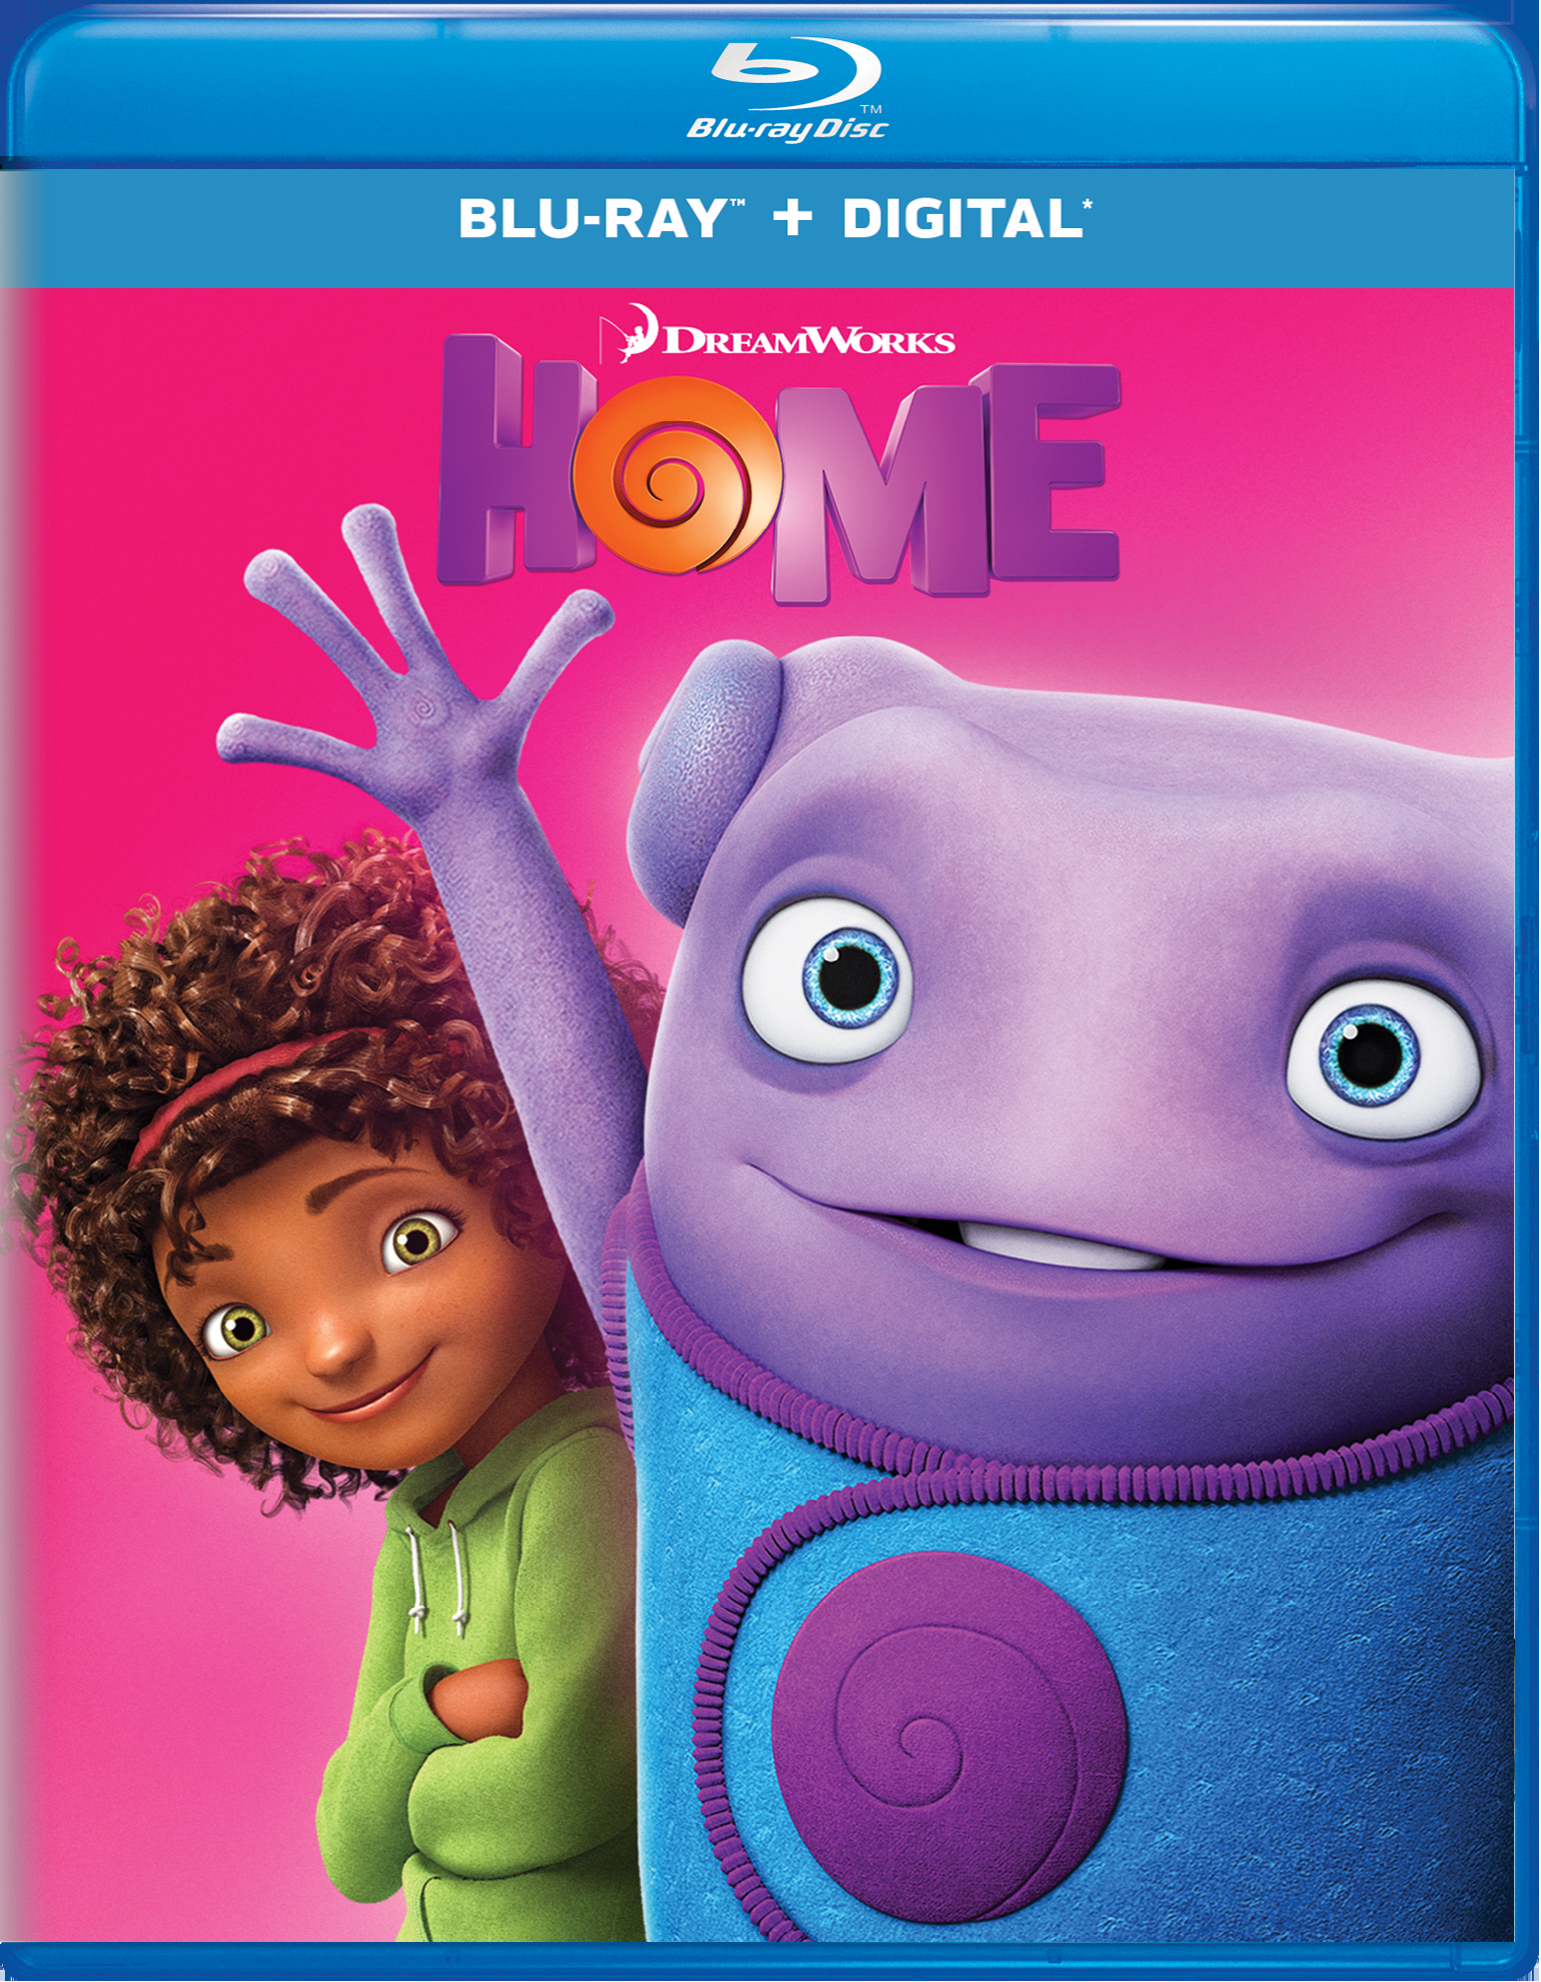 Home (Blu-ray New Box Art) - Blu-ray [ 2015 ]  - Children Movies On Blu-ray - Movies On GRUV